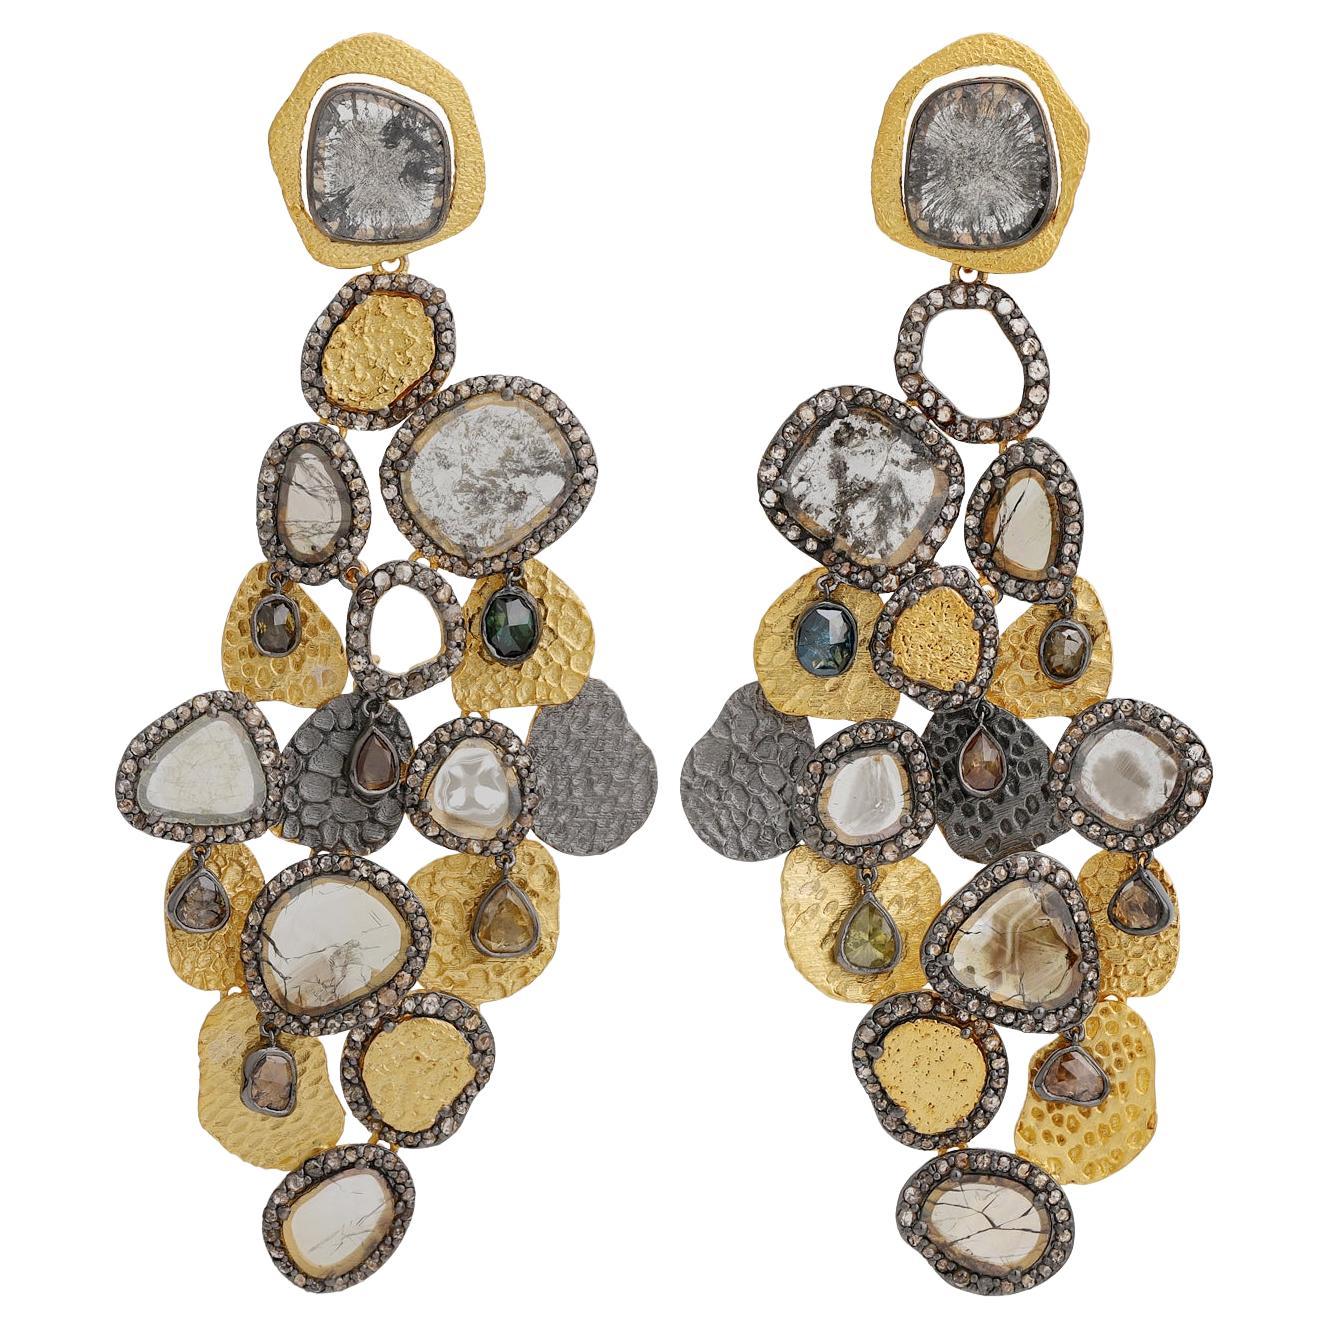 A.deitiy silver earrings with sliced diamonds & 3-micron gold & rhodium plating 